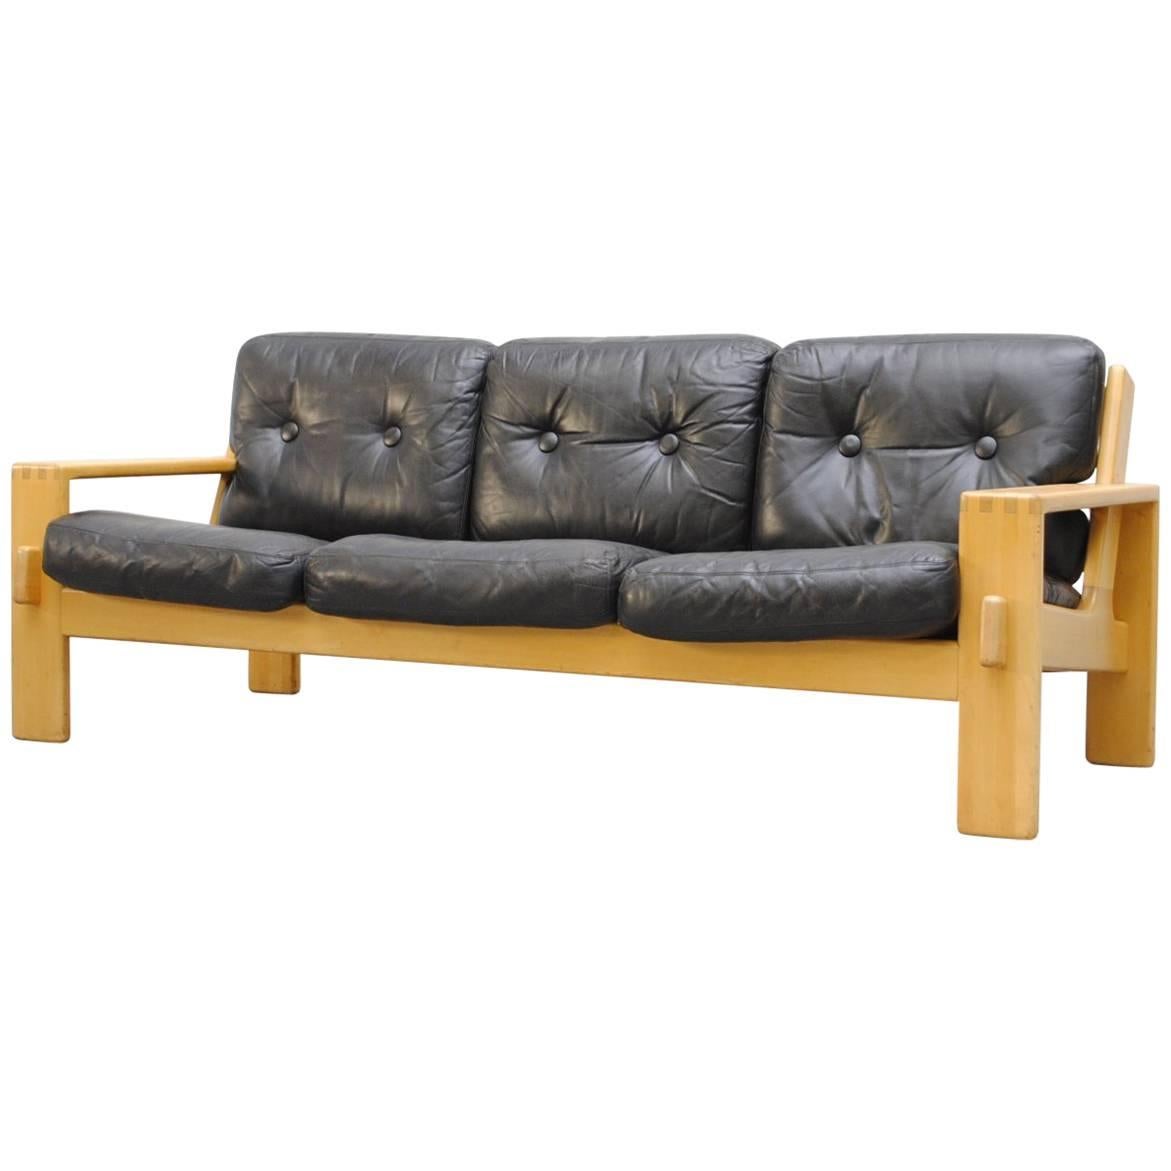 Finnish "Bonanza" Wood and Leather Sofa ‘Part of Set’